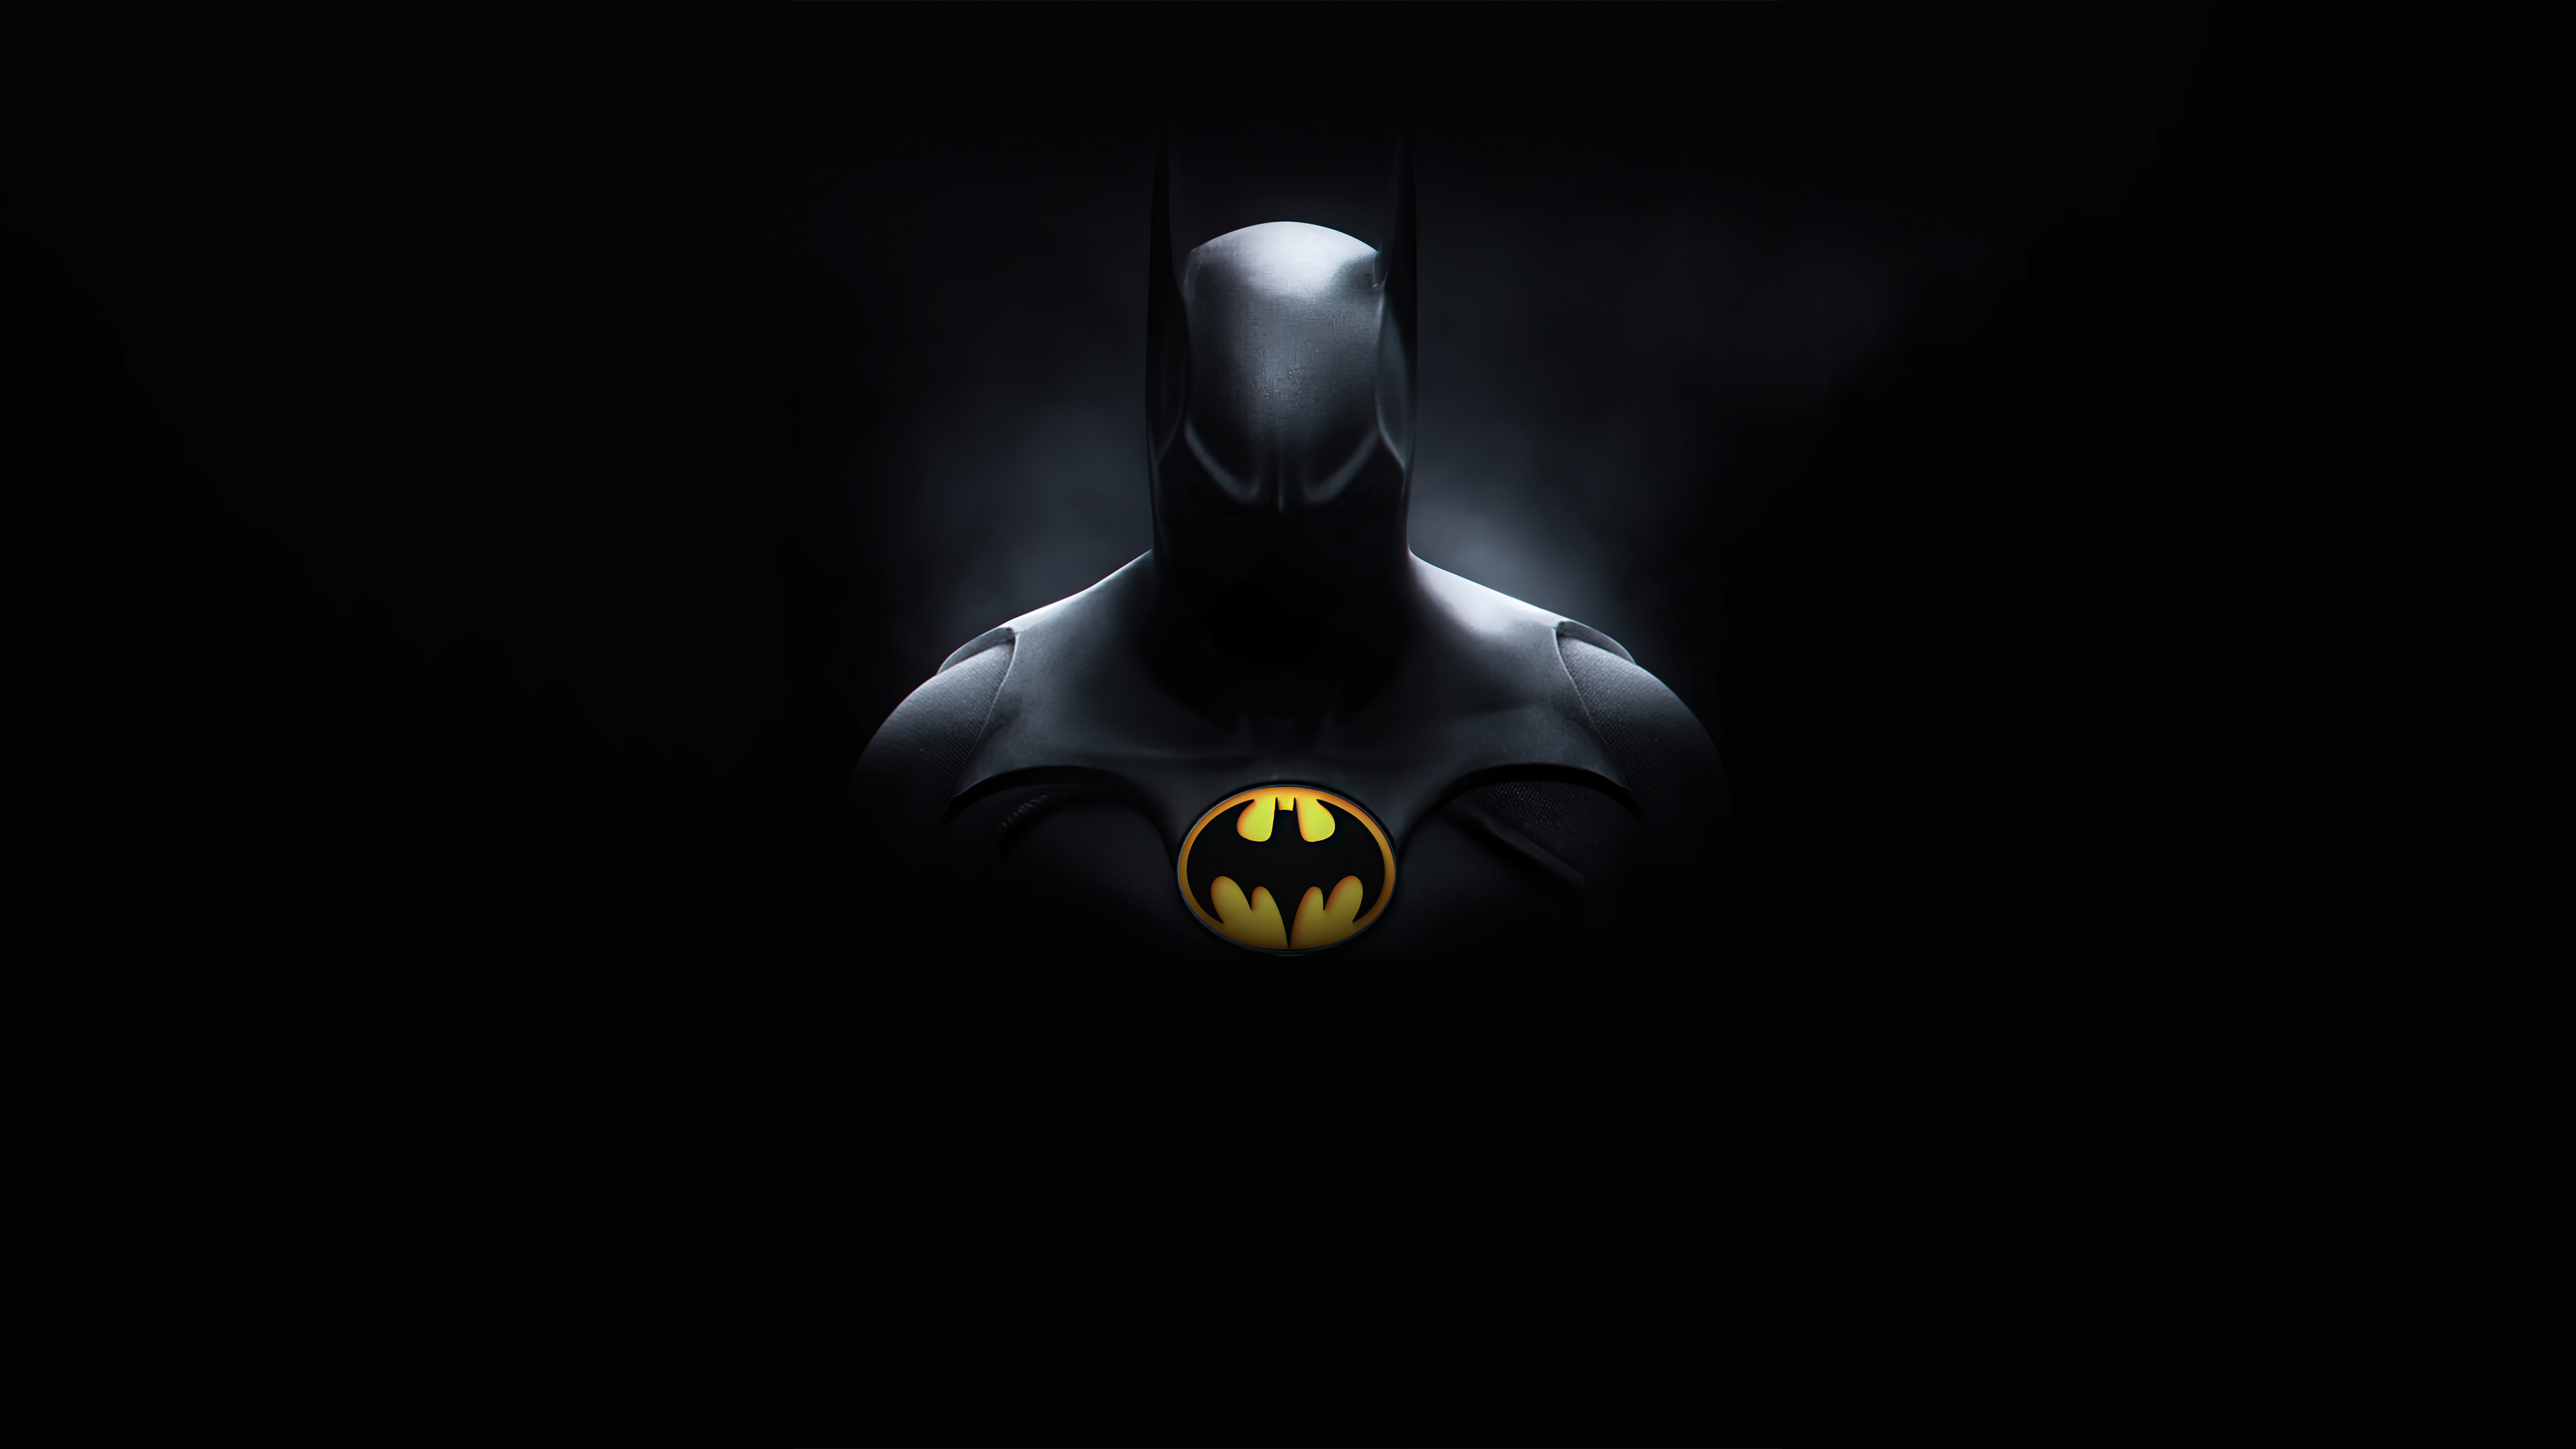 4k Batman Michael Keaton 1440P Resolution HD 4k Wallpaper, Image, Background, Photo and Picture